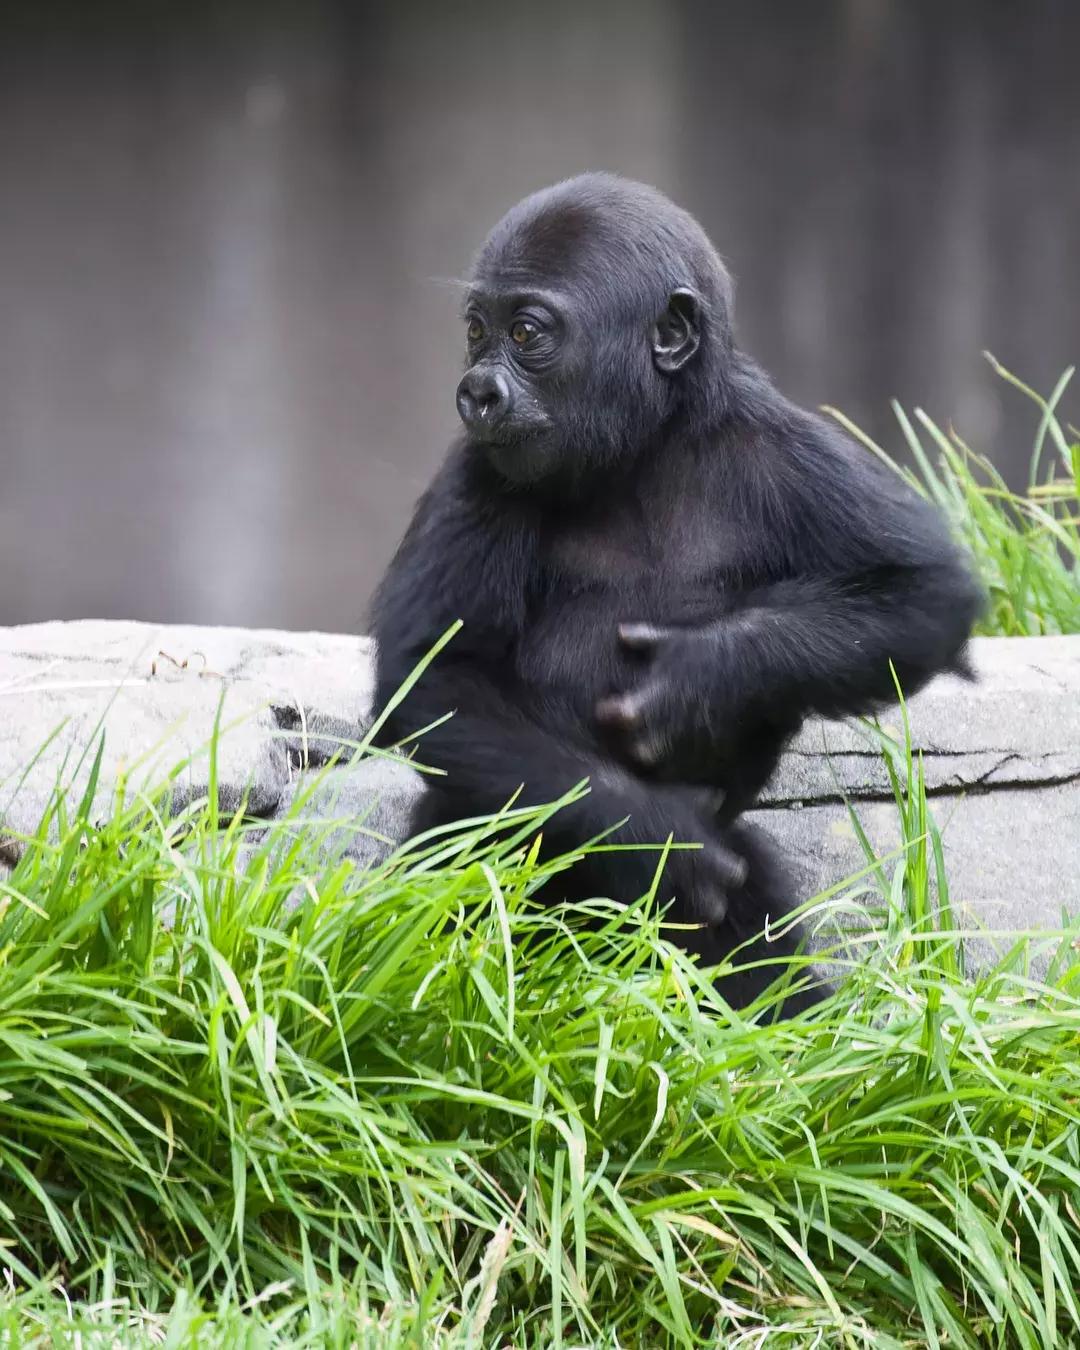 A baby gorilla at the San Francisco Zoo.